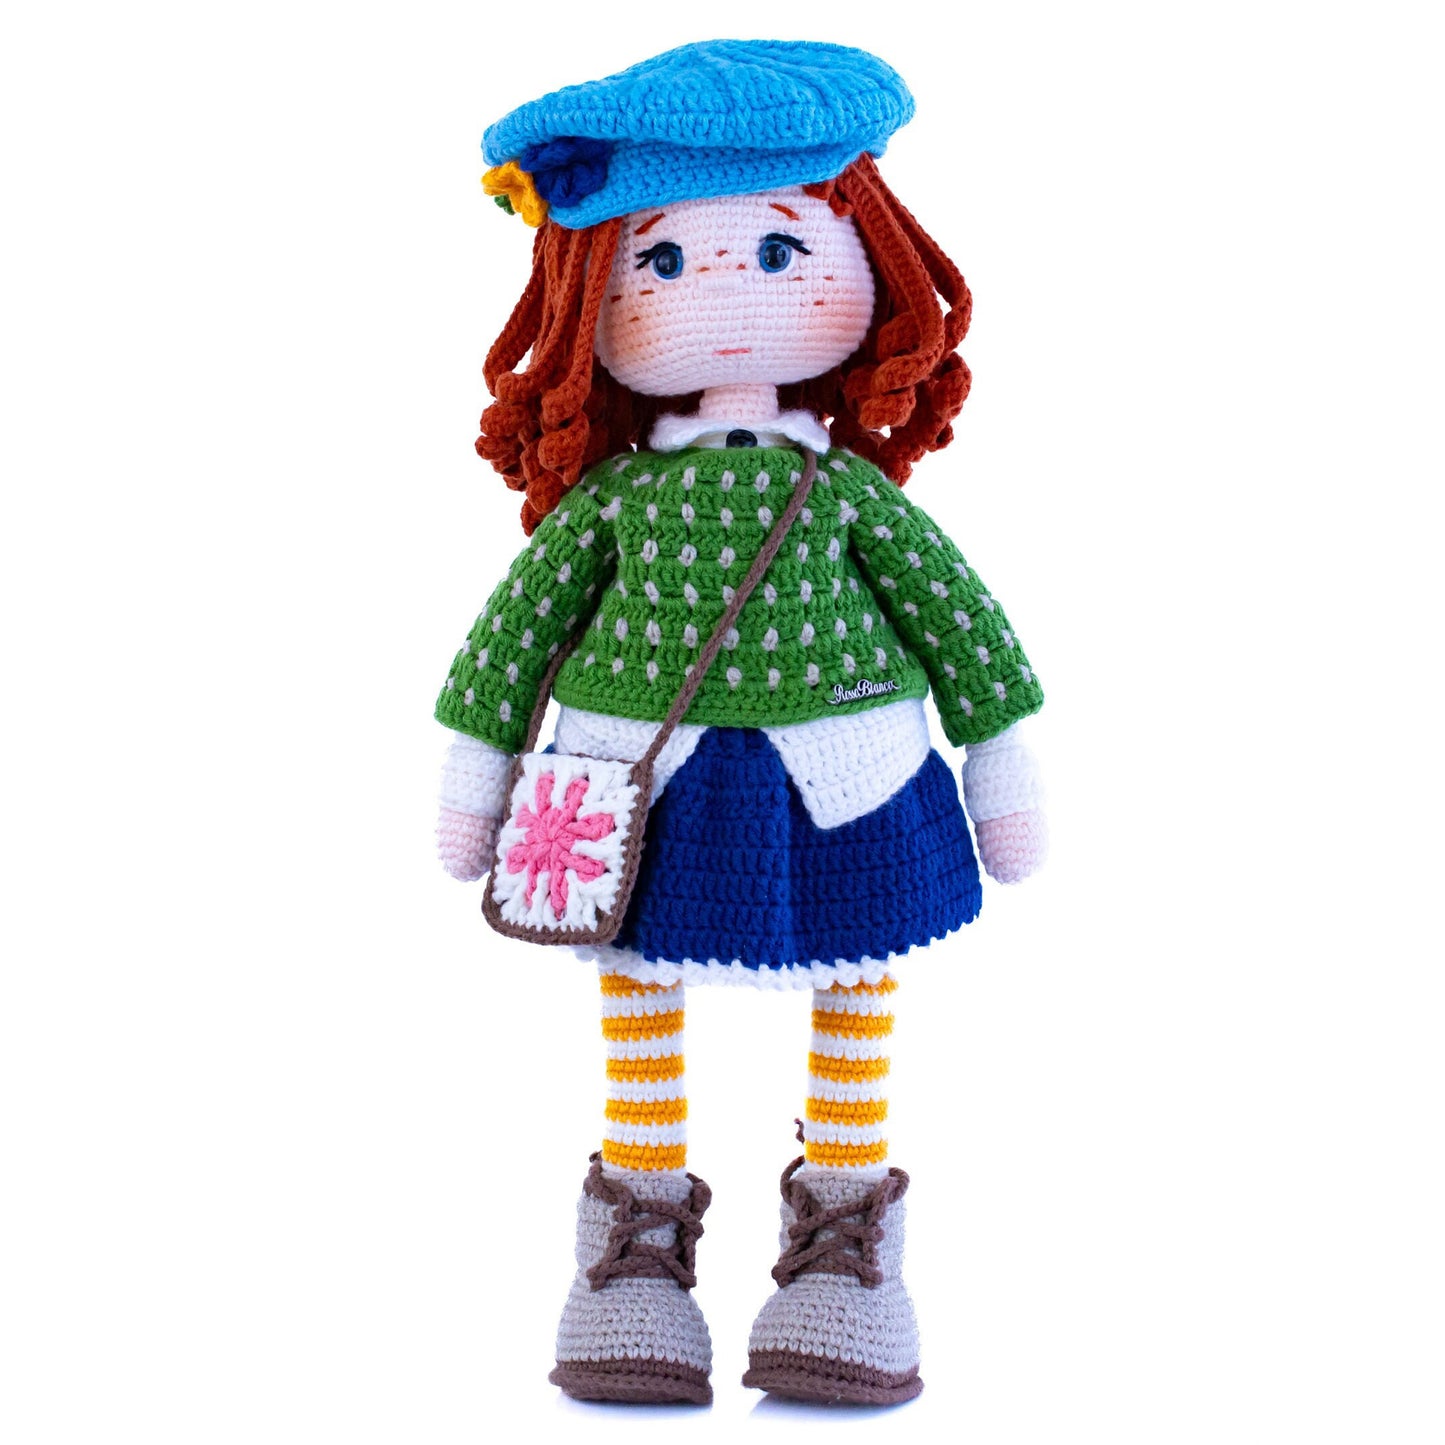 Amigurumi Doll Tina, Crochet Doll Amigurumi, Knitted Dolls, Handmade Doll, Christmas Gift